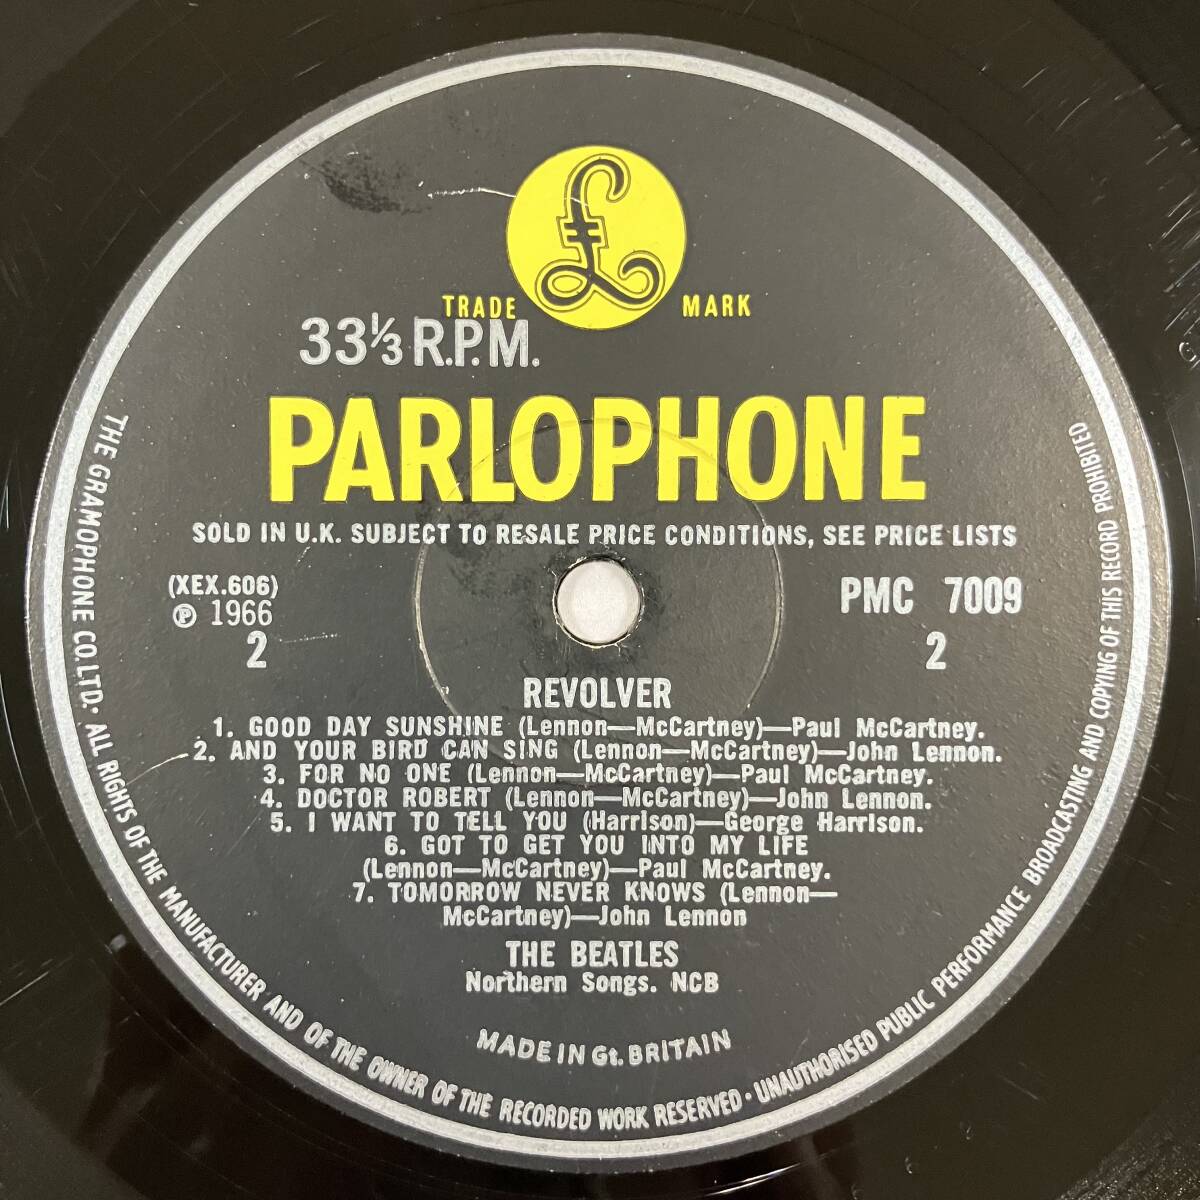 mato2/2 UK монофонический запись желтый pa-ro phone 2nd Press REVOLVER Beatles THE BEATLES